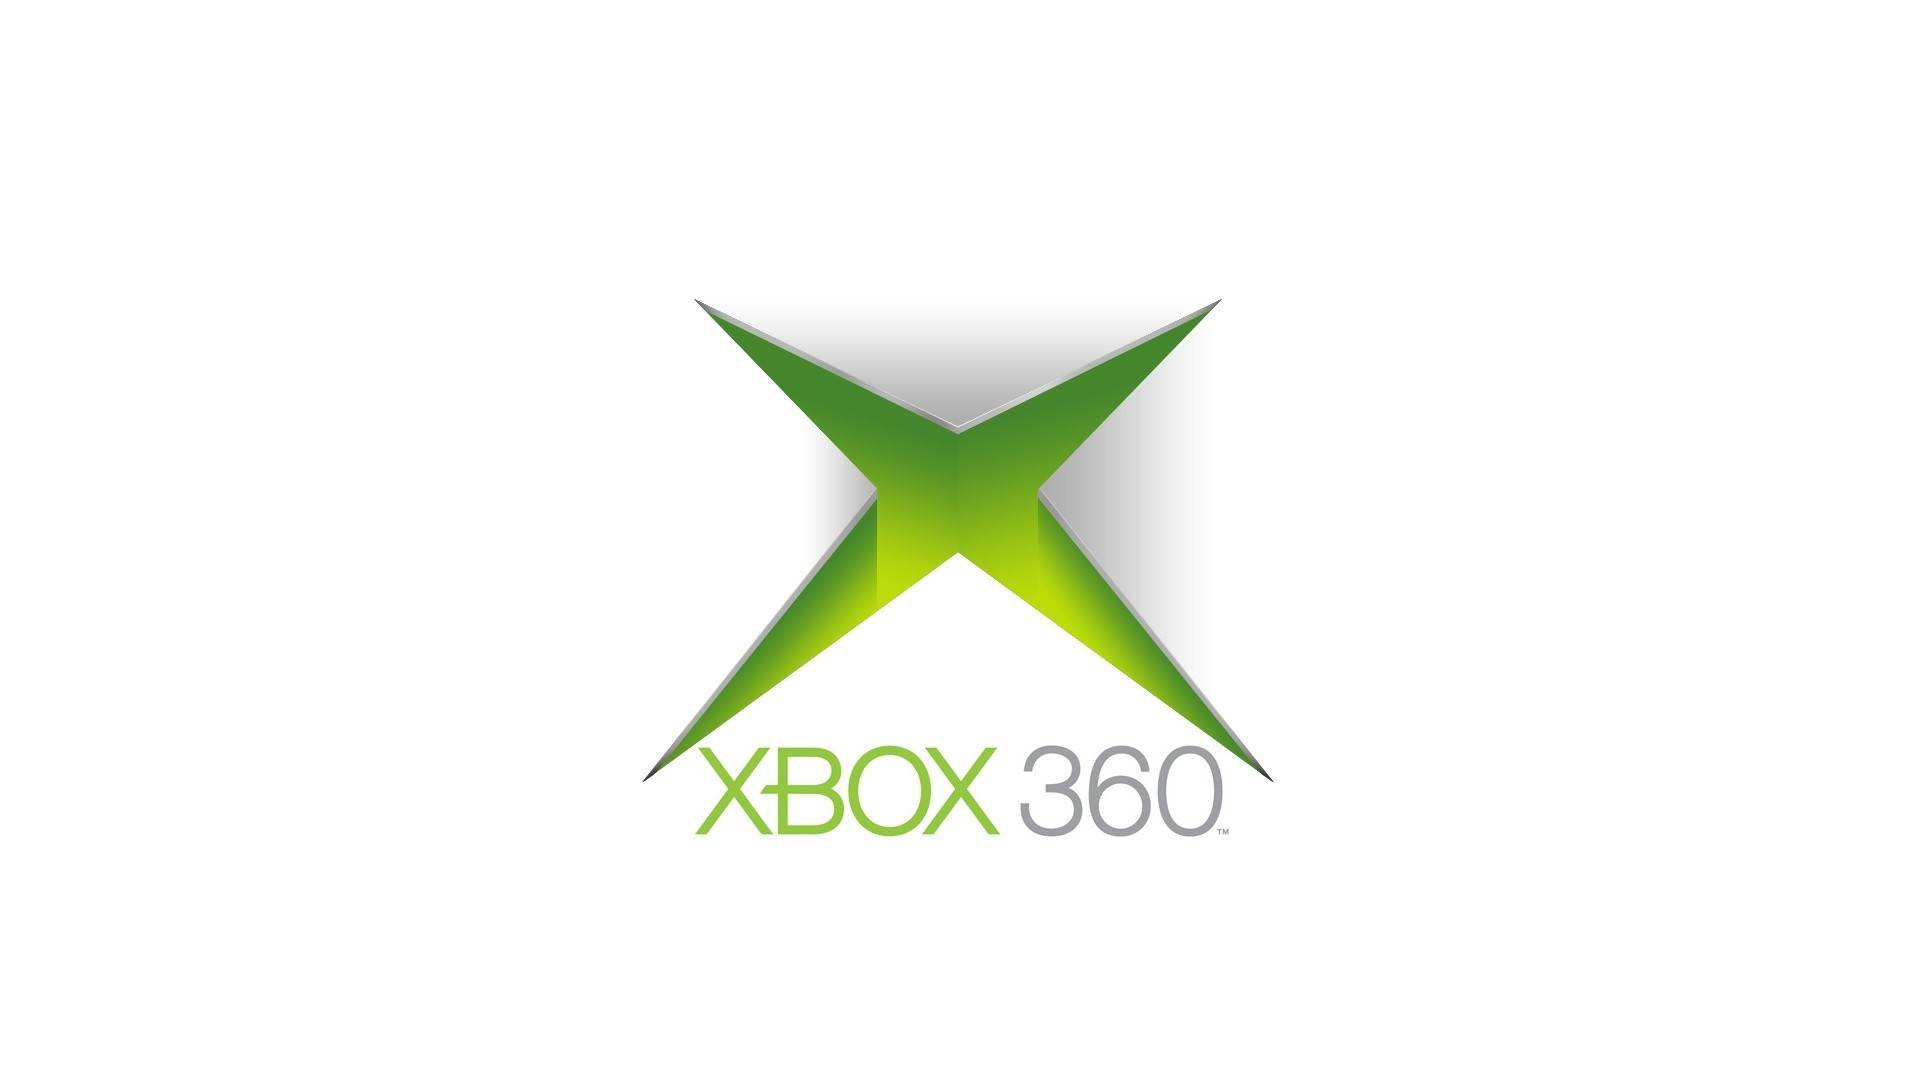 Xbox 360 19201080 Wallpaper 1684672 1920x1080